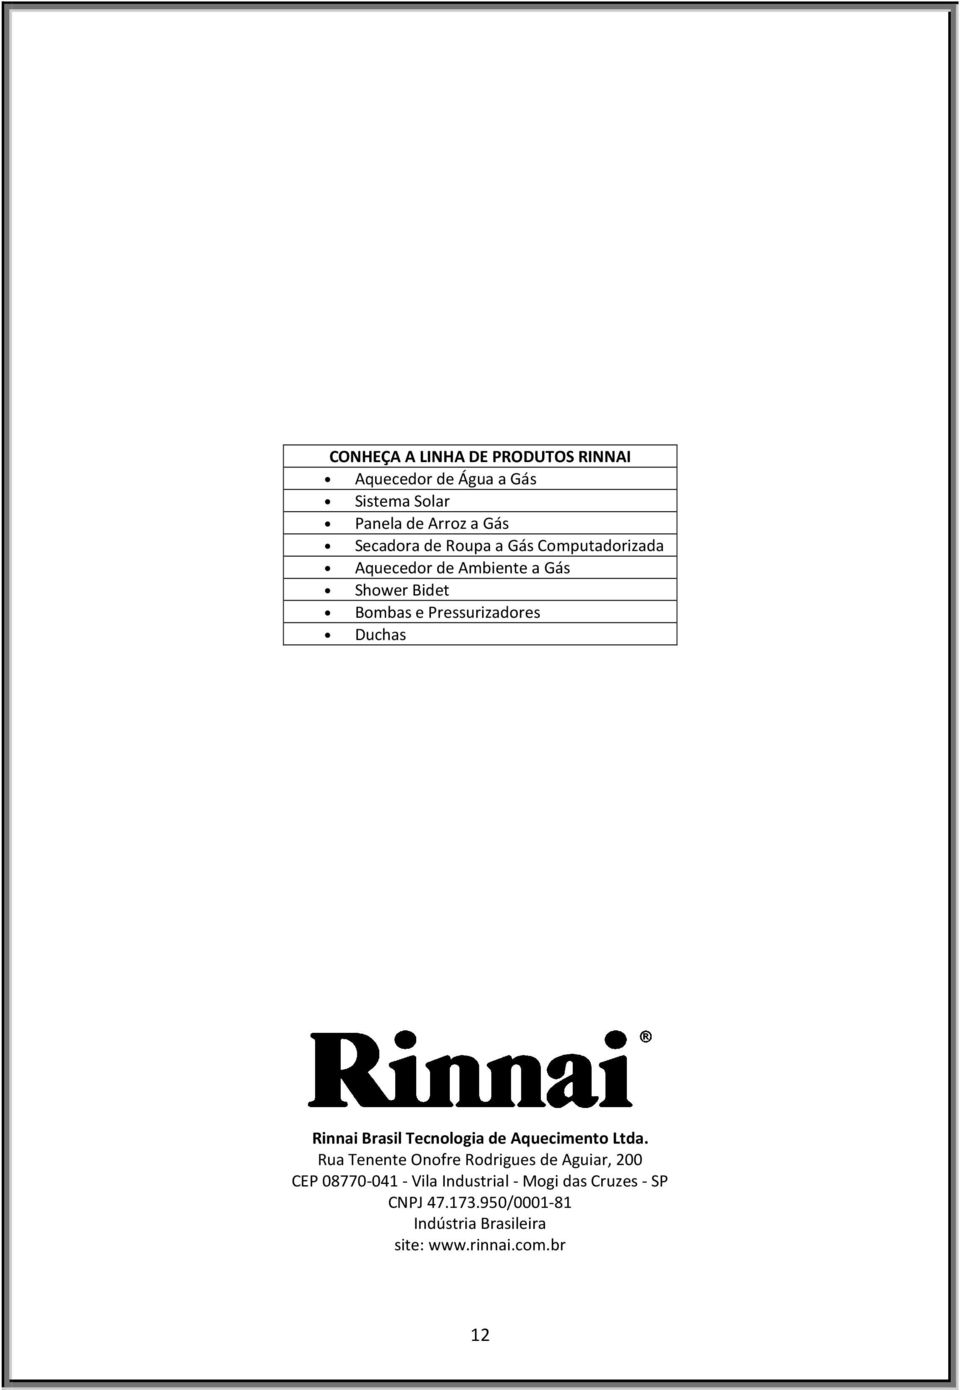 Rinnai Brasil Tecnologia de Aquecimento Ltda.